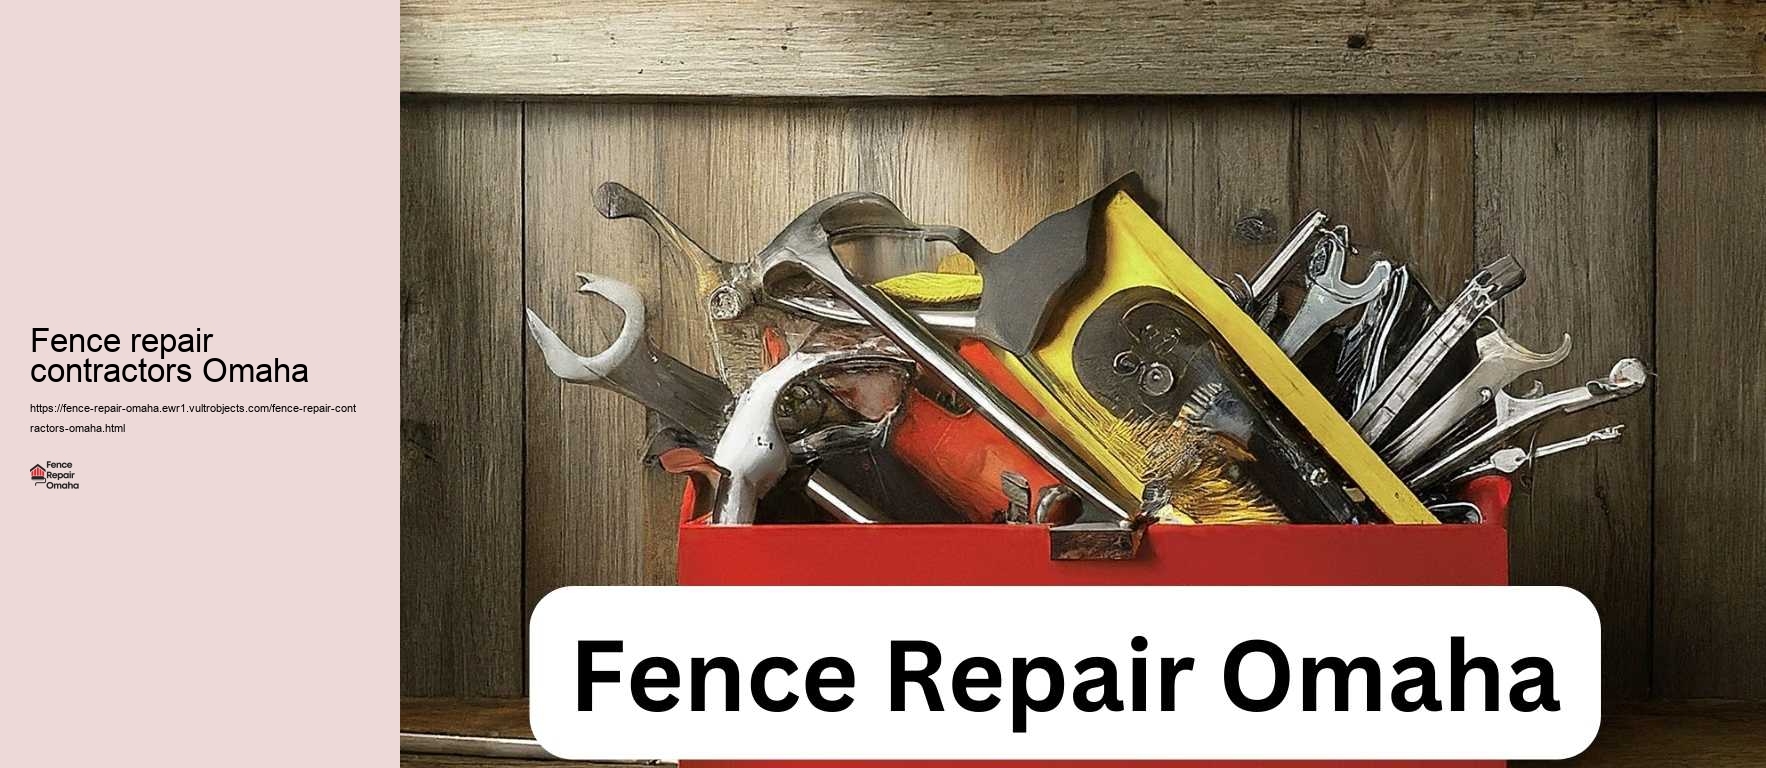 Fence repair contractors Omaha